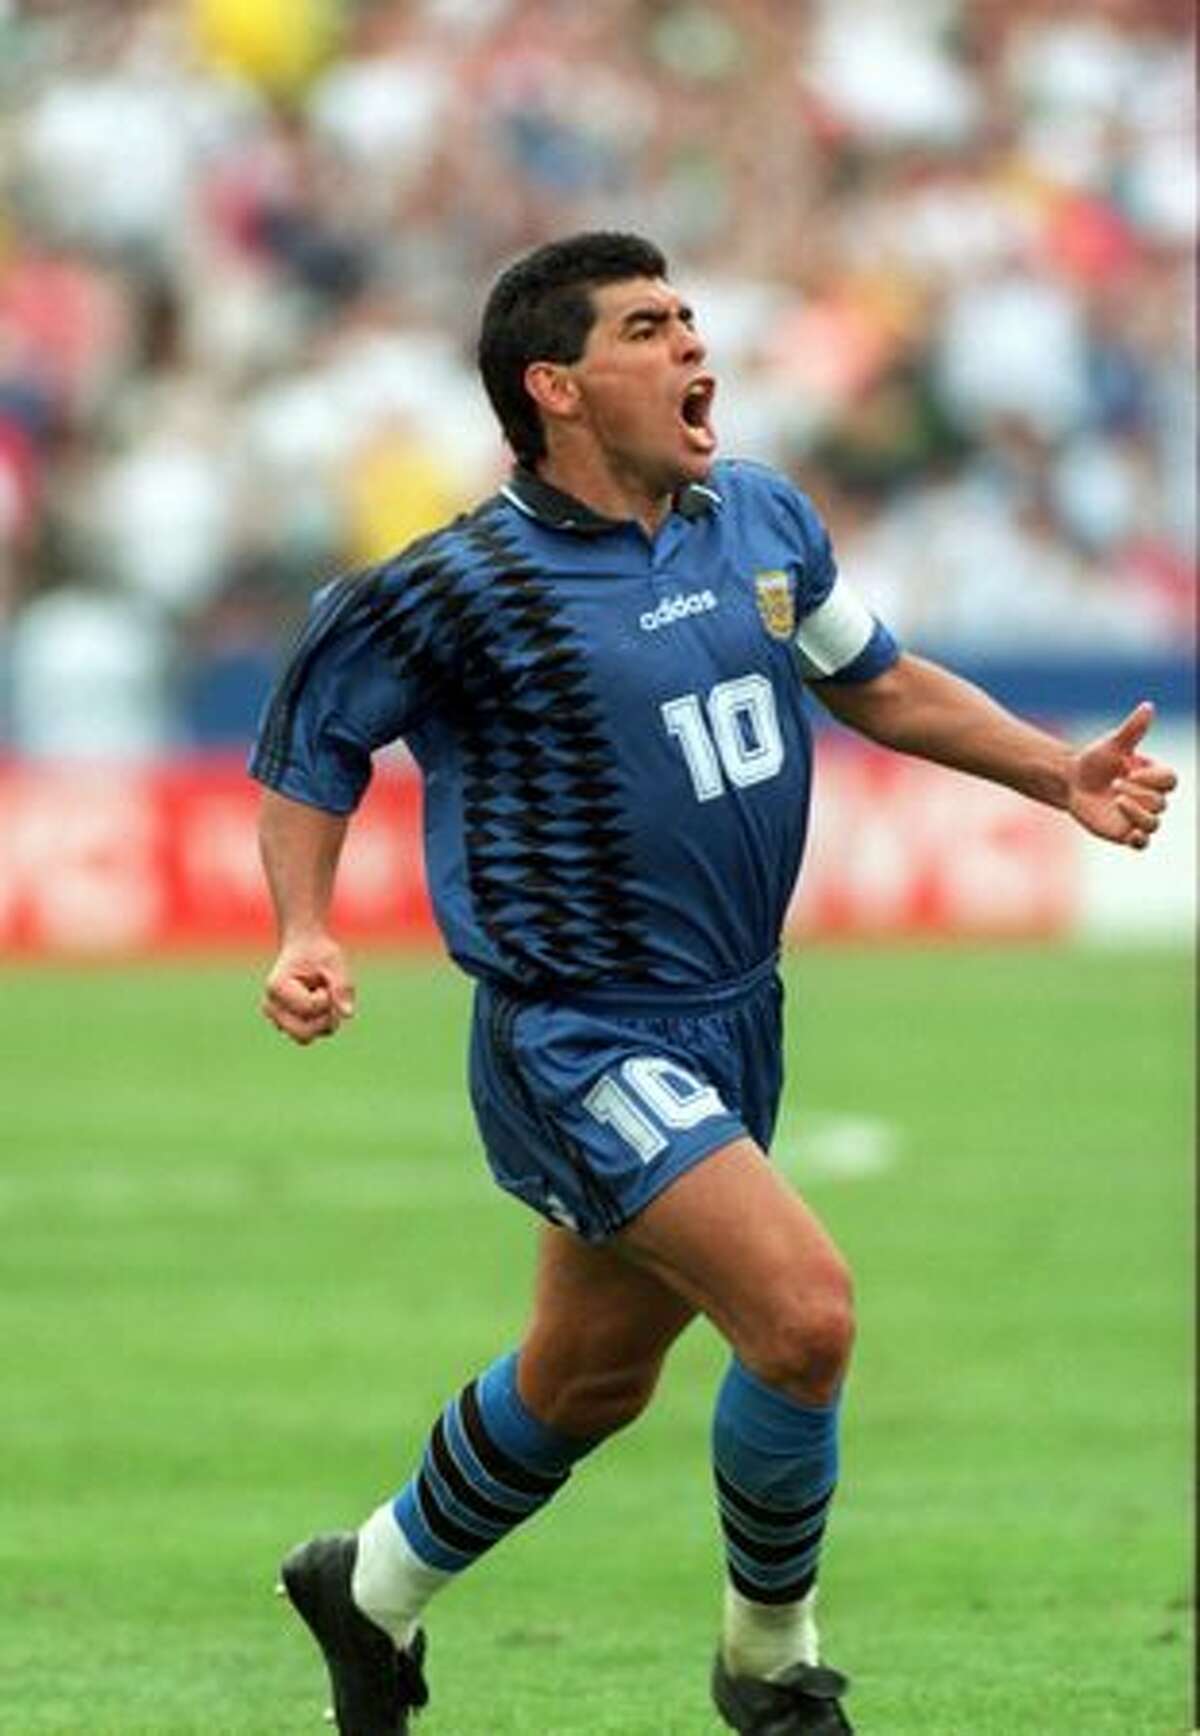 1994: Diego Maradona of Argentina celebrates scoring Argentina's third goal en route to defeating Greece 4-0 Foxboro Stadium in Massachusetts.